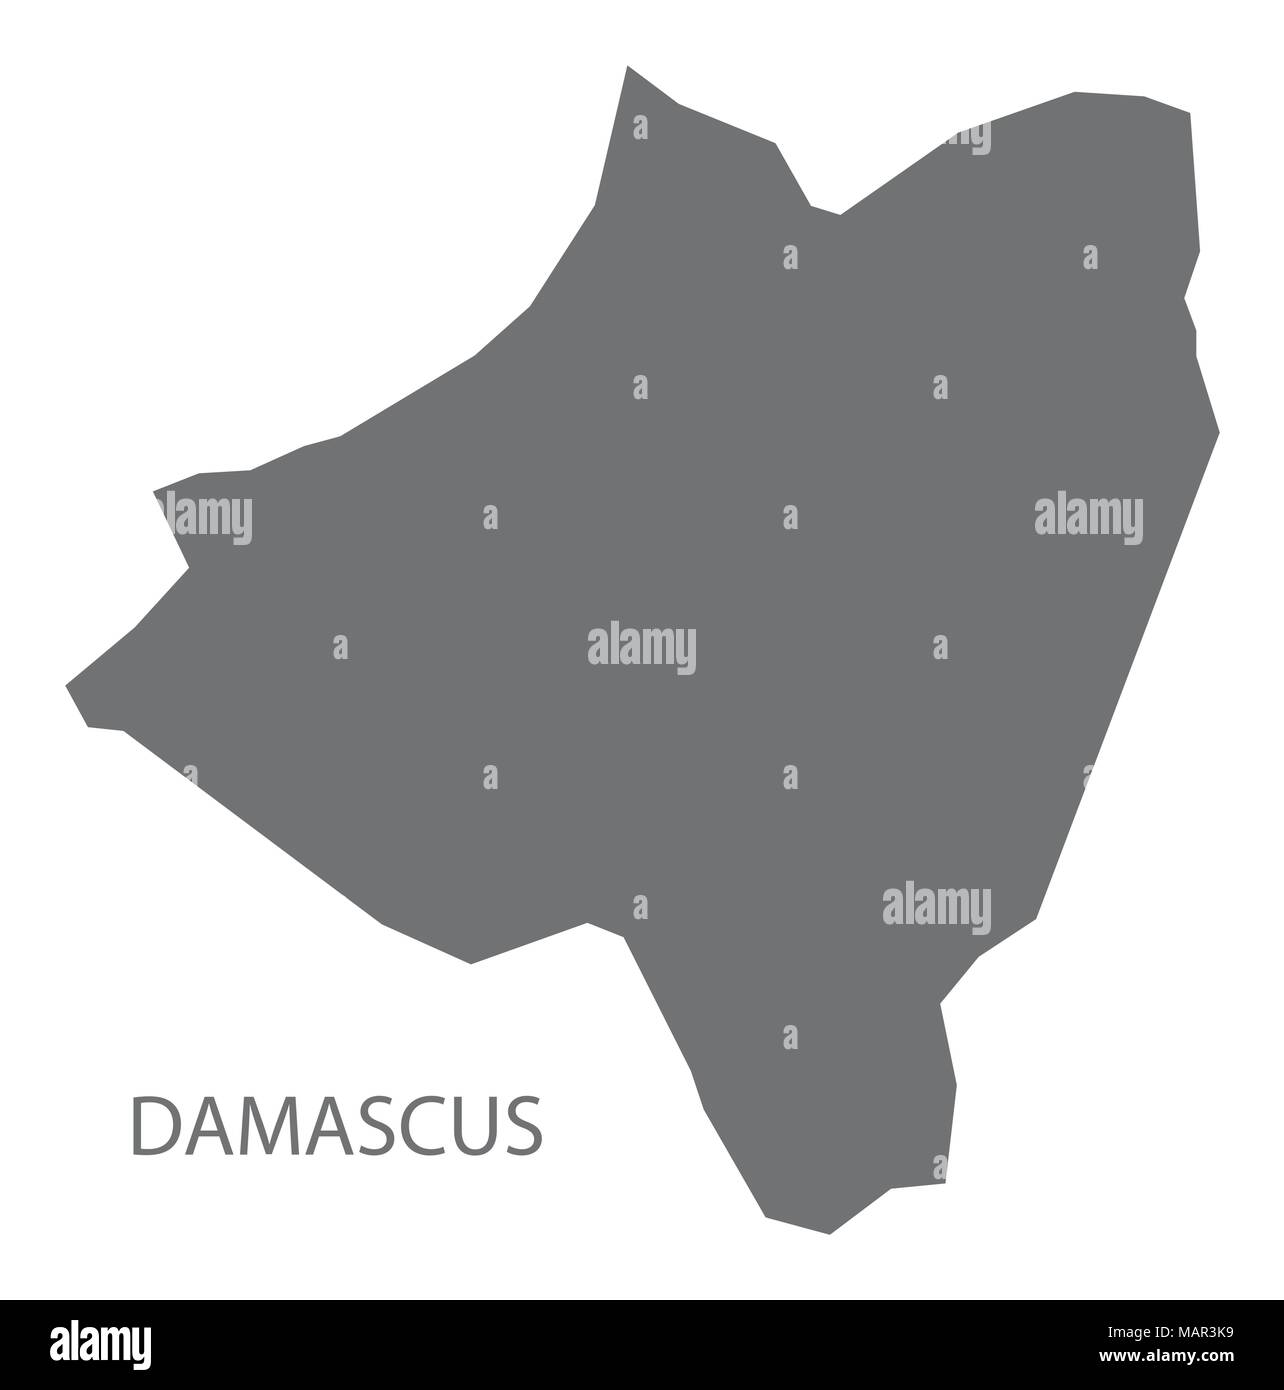 Damascus map of Syria grey illustration shape Stock Vector